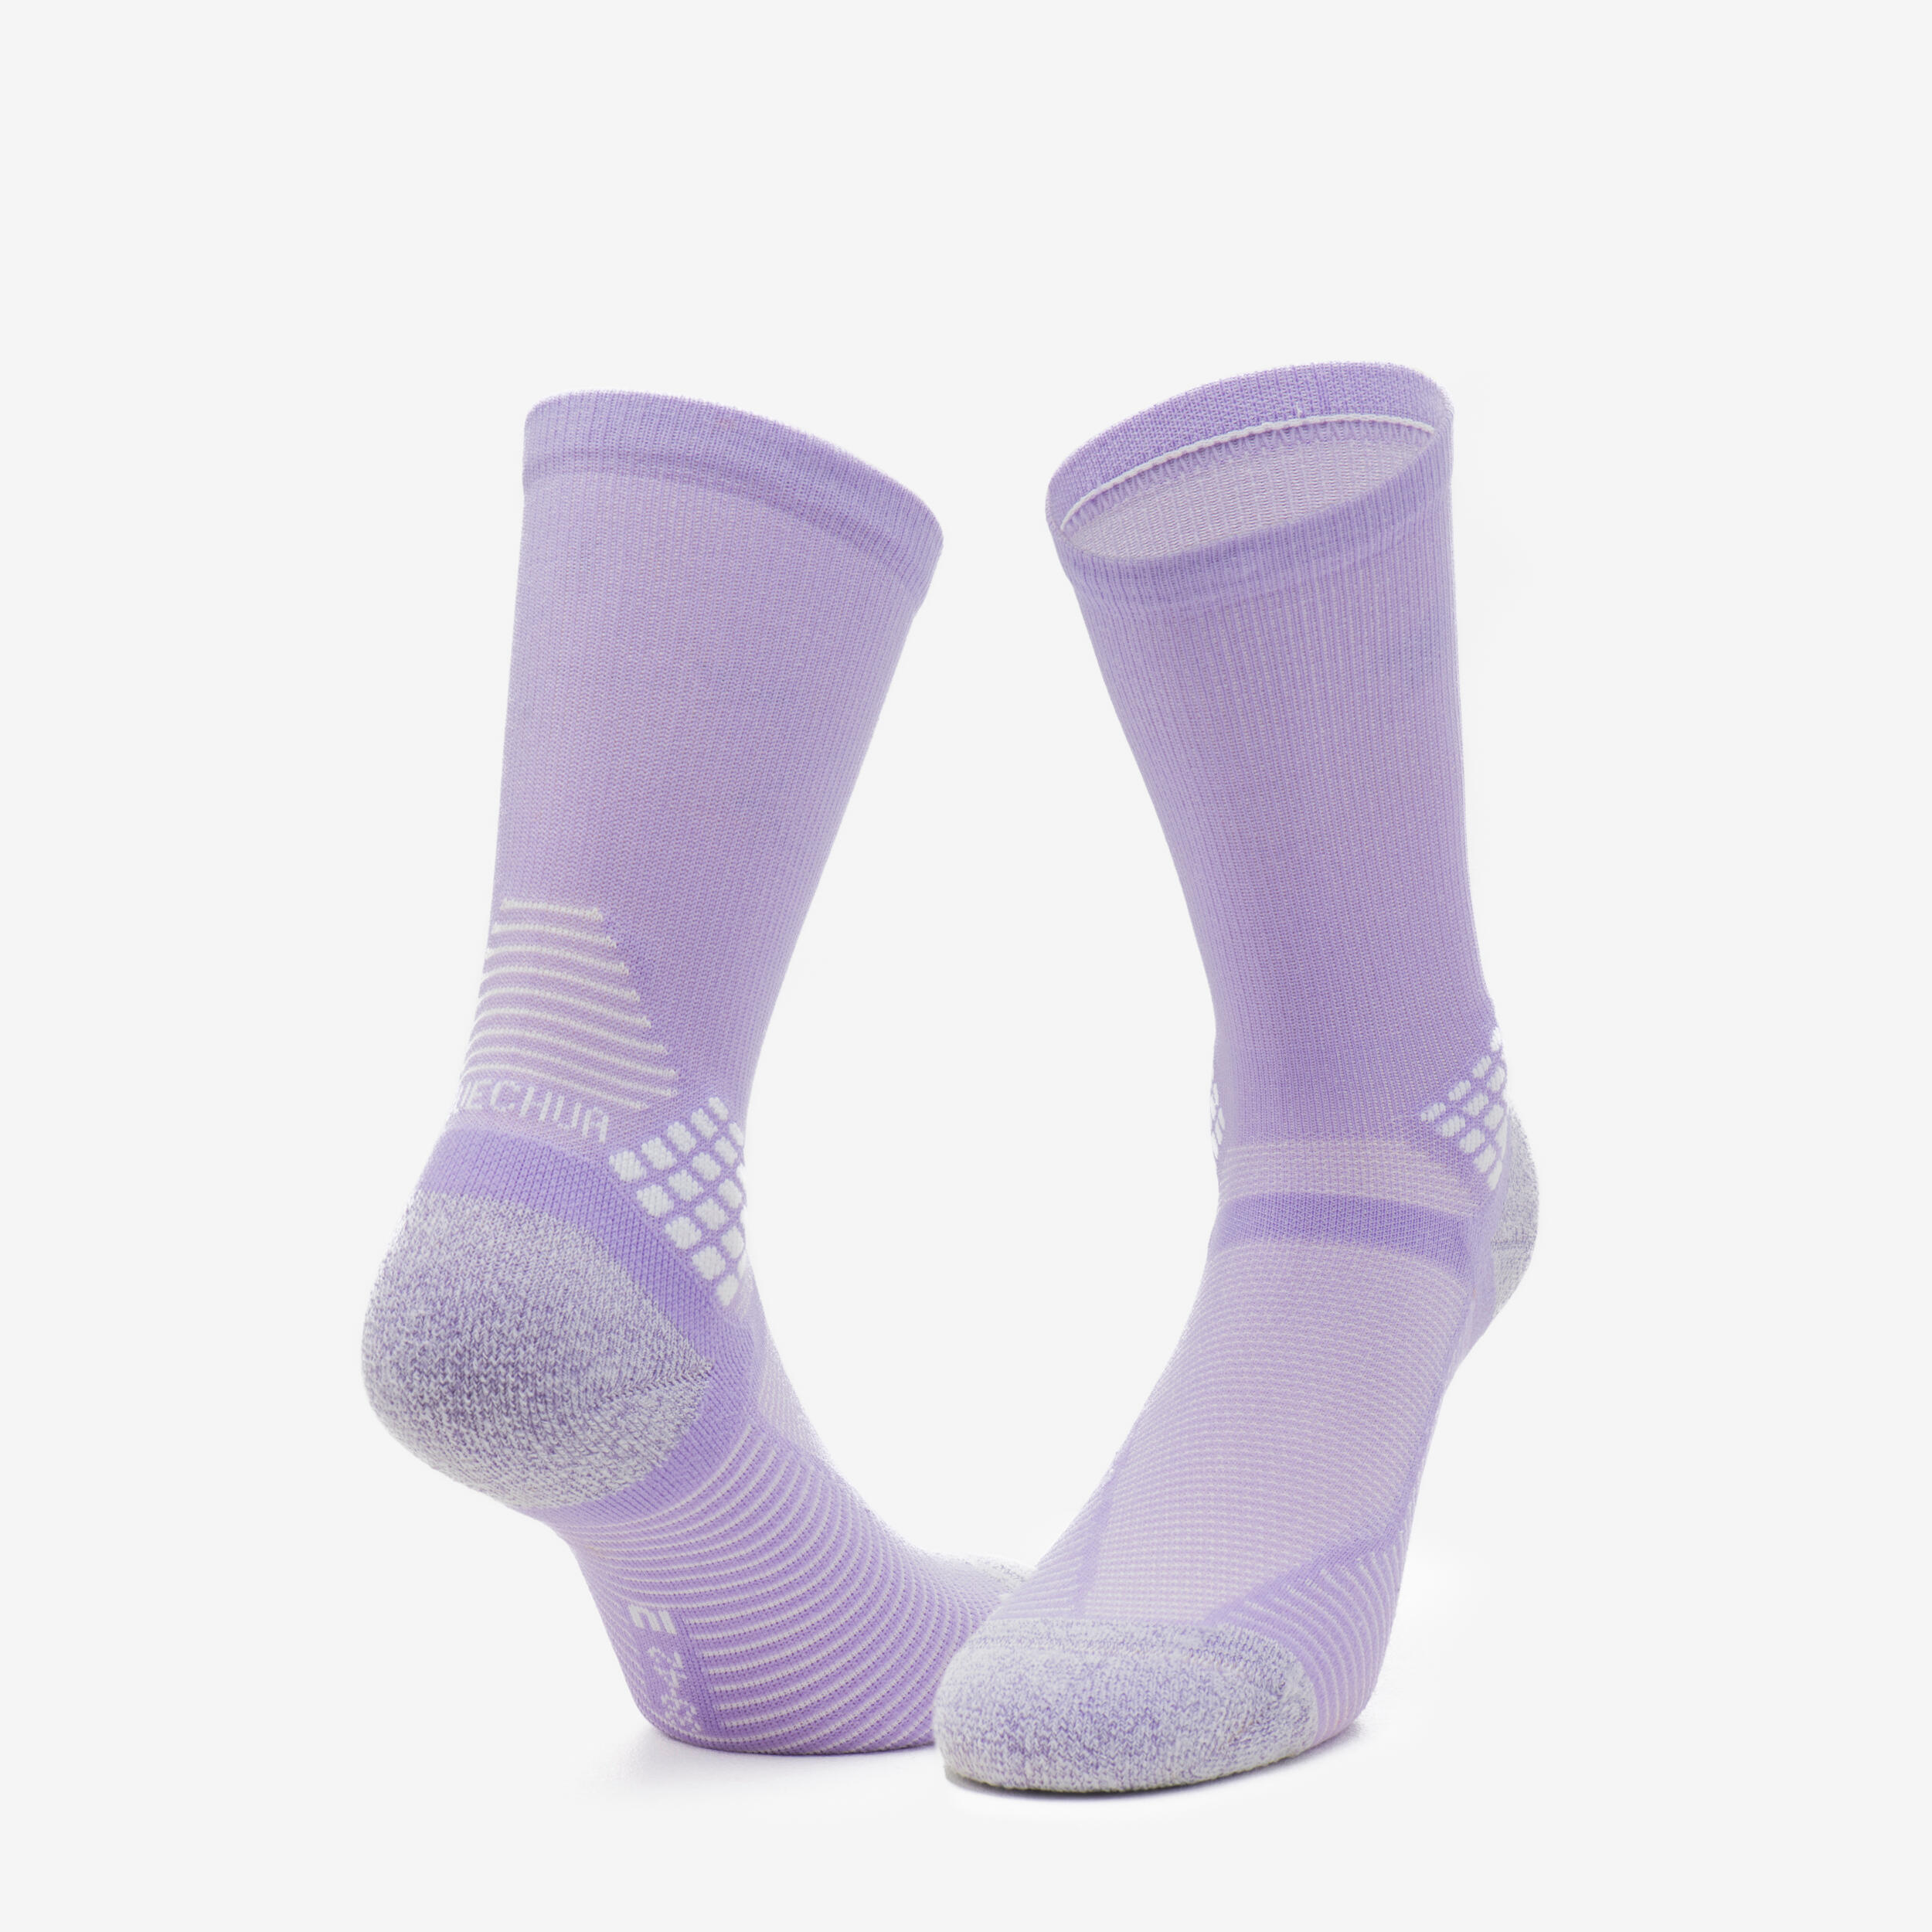 Hiking Socks Hike 500 High Trendy x2 Pairs - Purple & Kamo 9/13